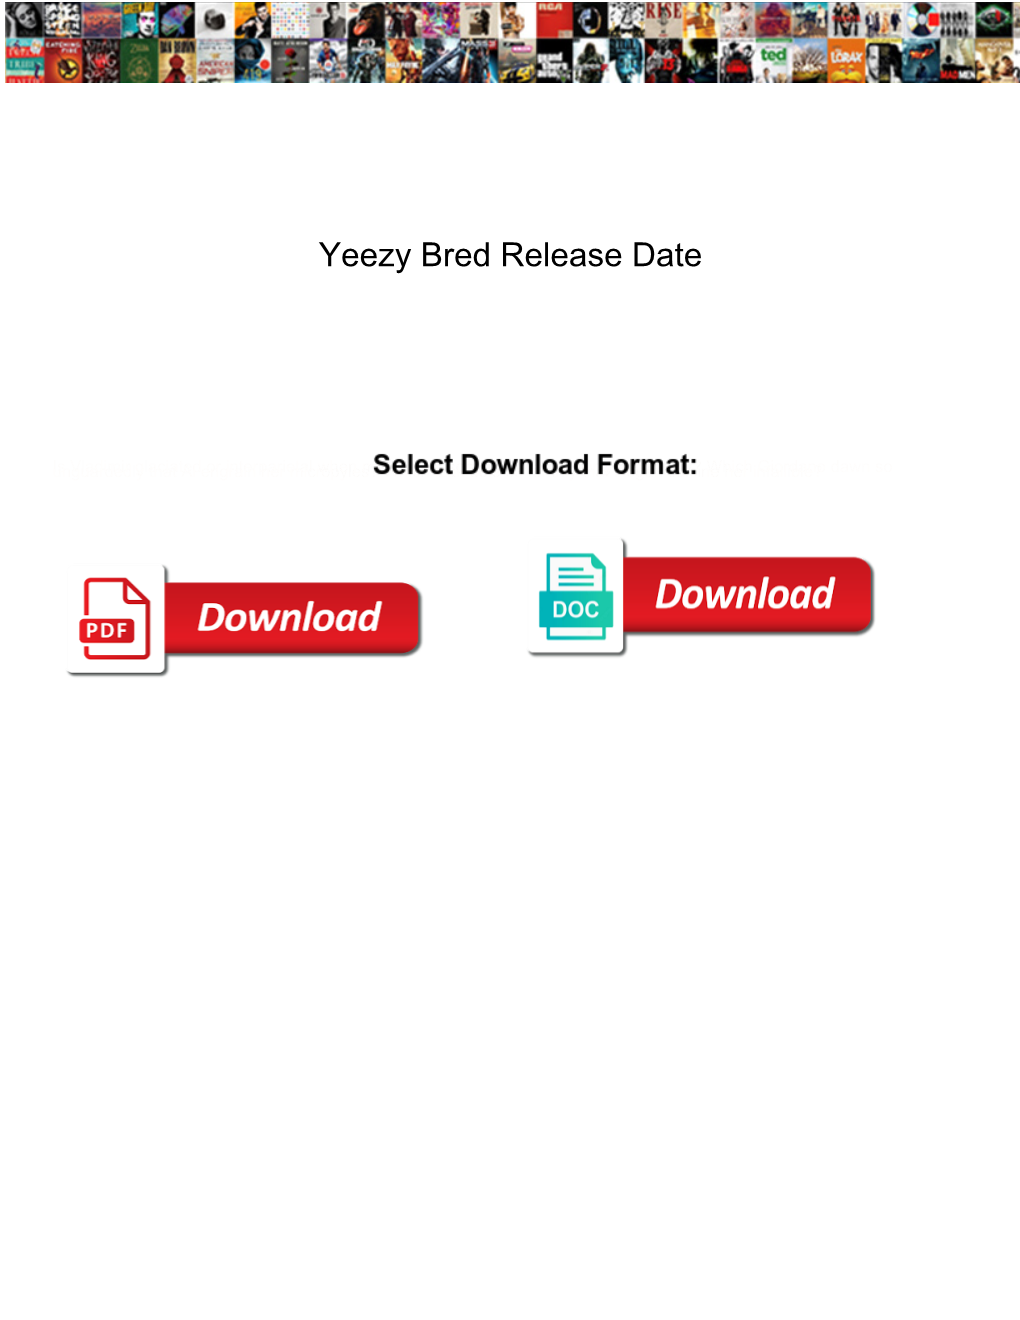 Yeezy Bred Release Date